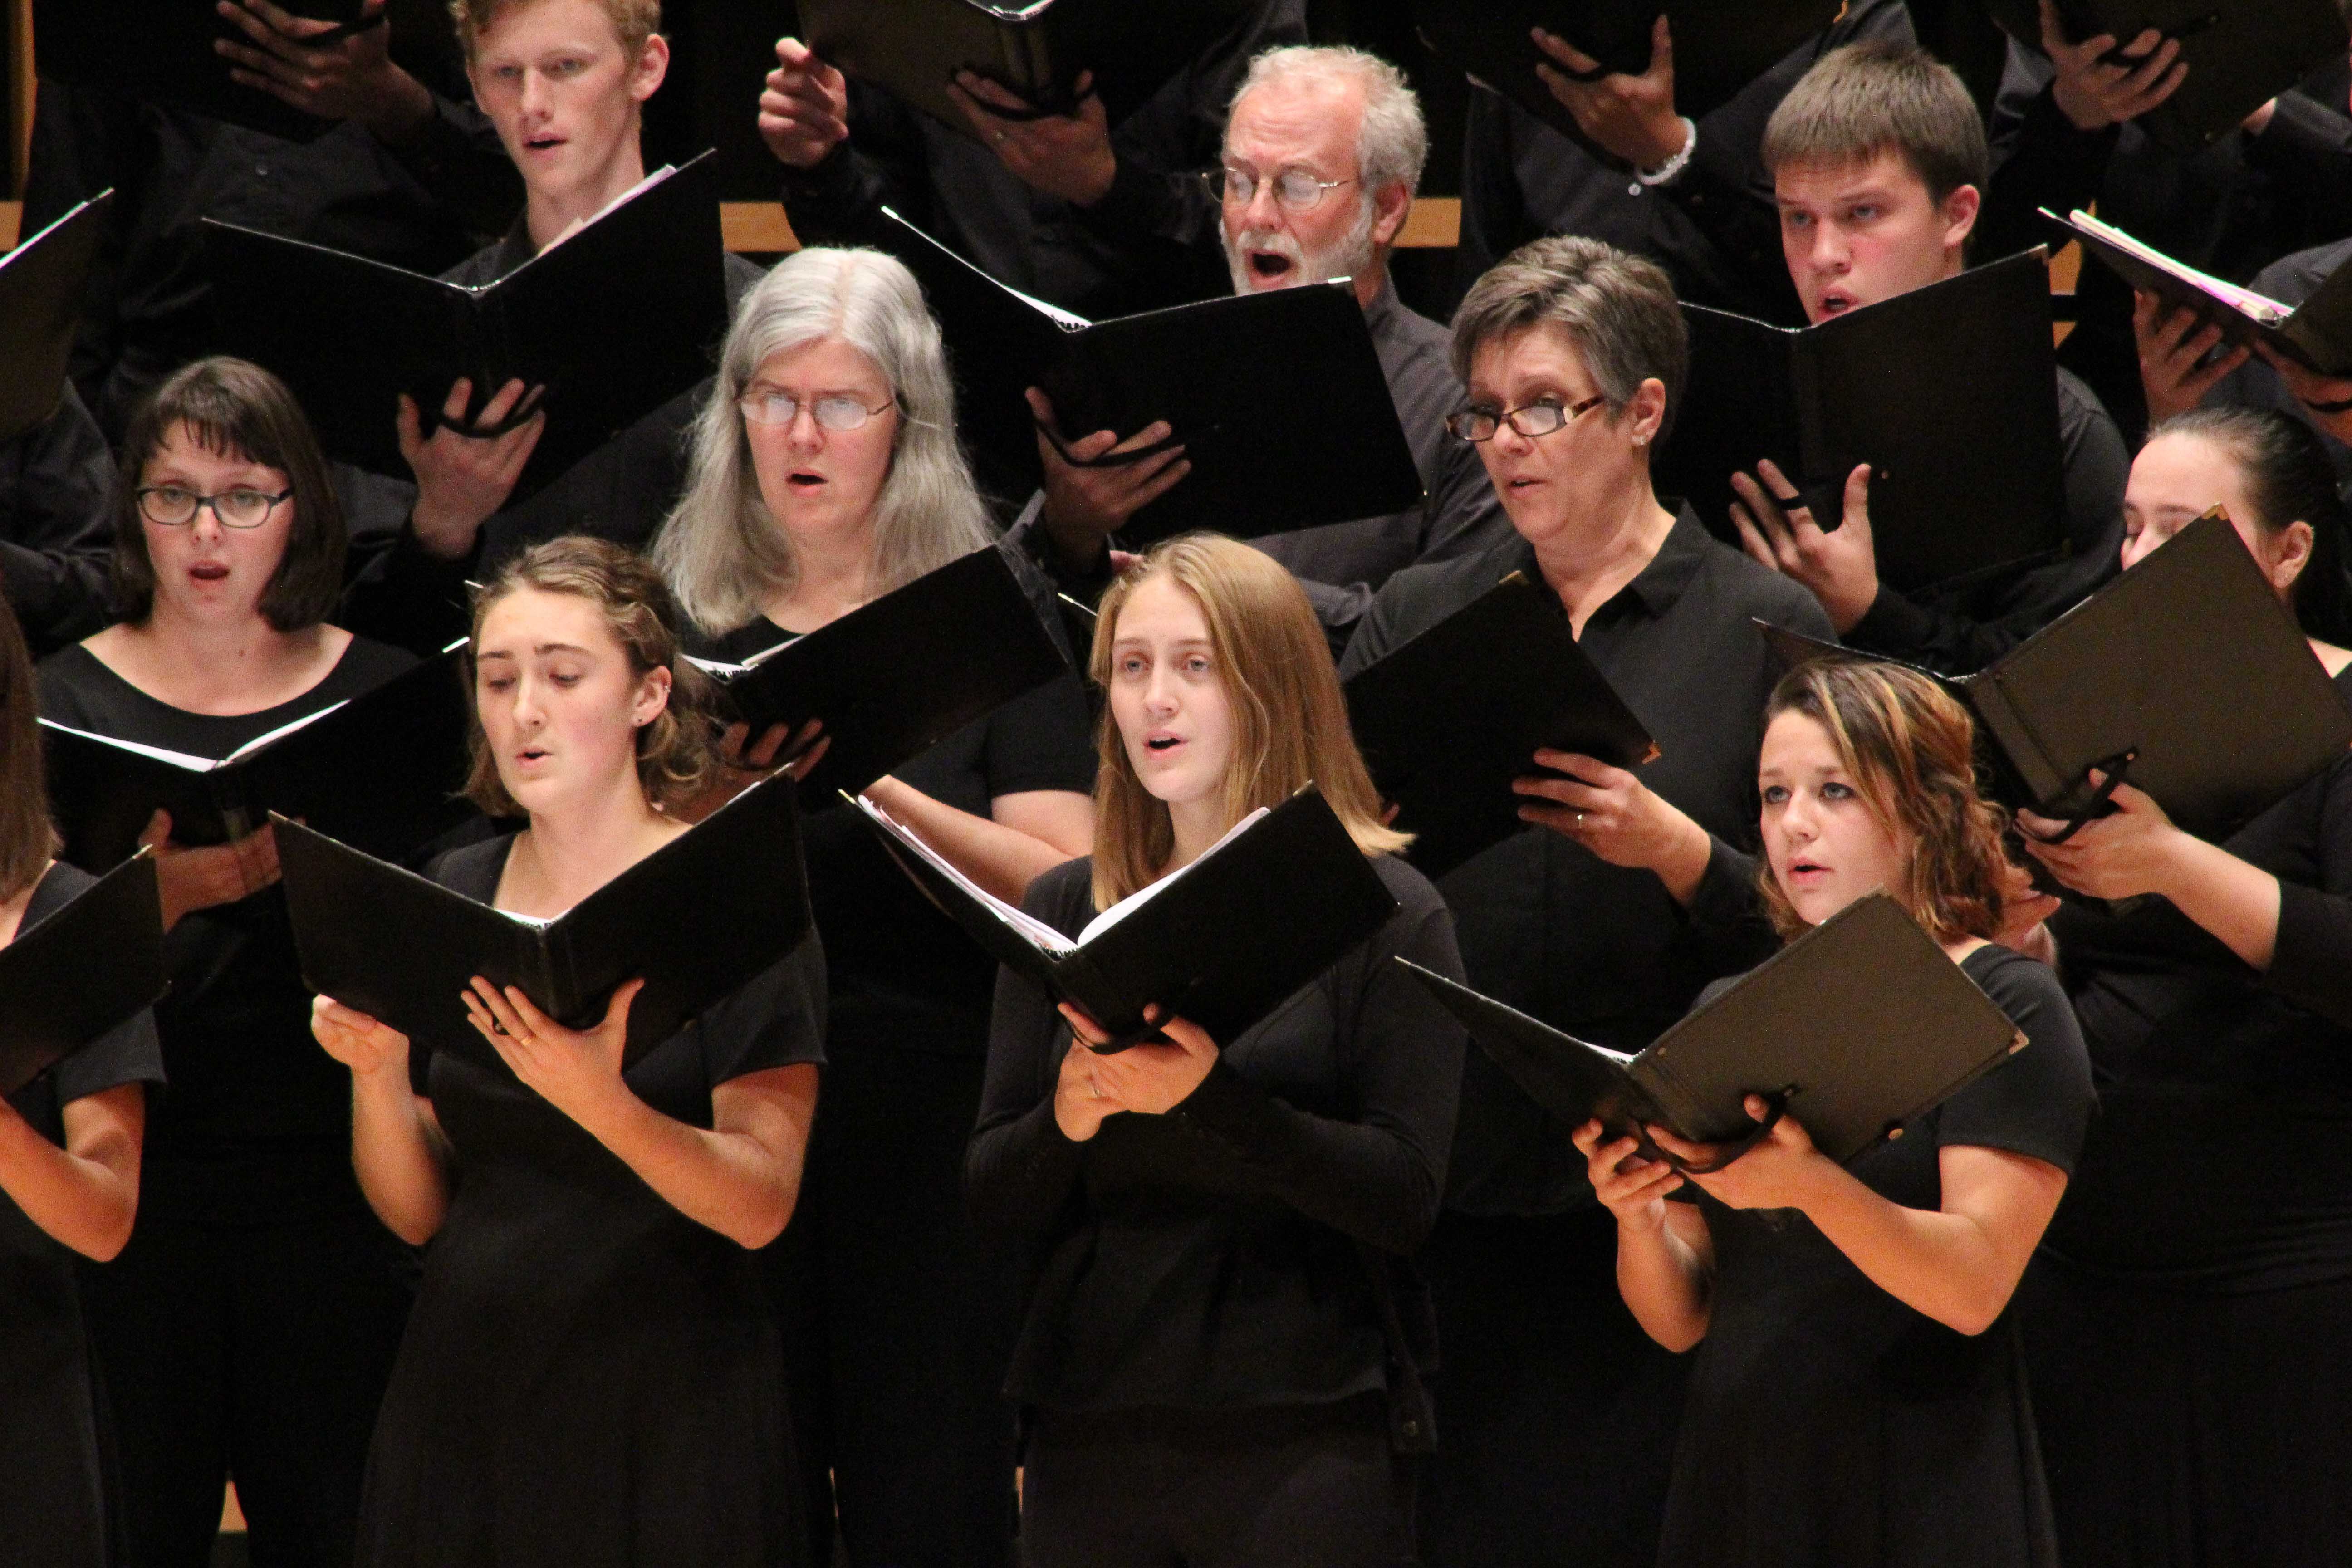 Chamber Choir with St. Joseph Valley Camerata | Goshen College